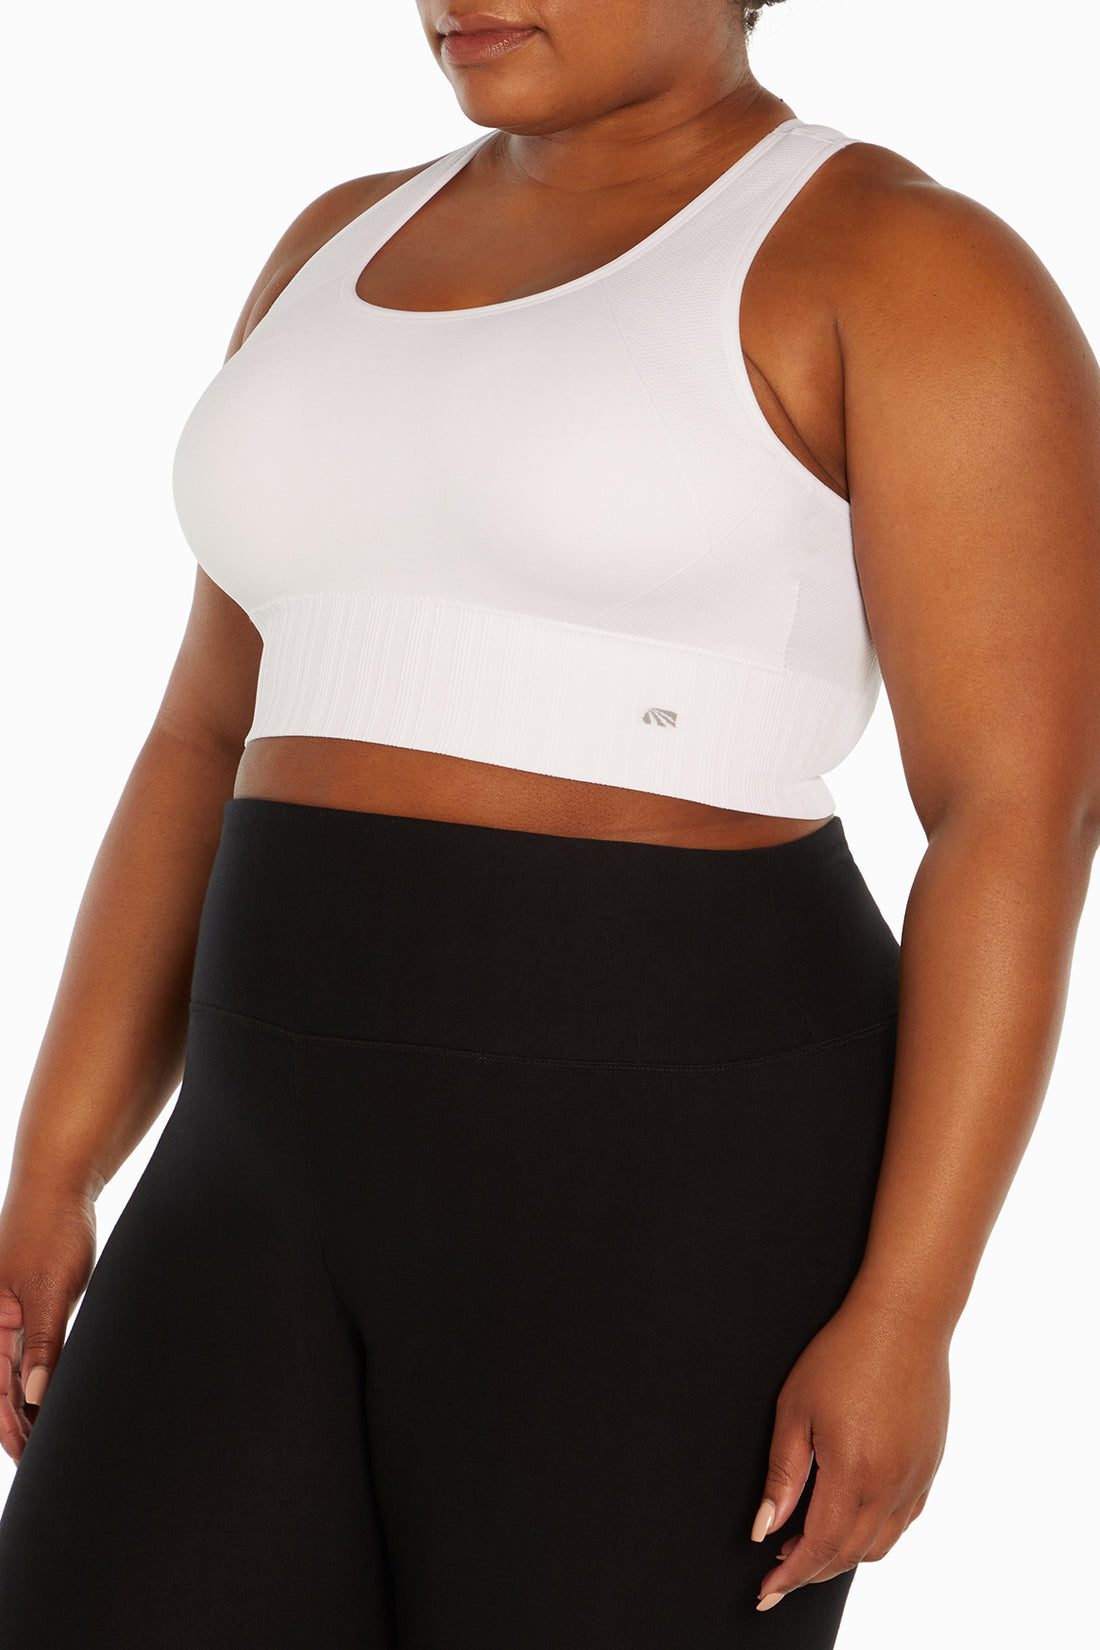  ZERDOCEAN Women's Plus Size Active Yoga Sweatpants Cotton  Jersey Capris Athletic Crop Pants with Pockets Drawstring Dark Gray 1X :  Clothing, Shoes & Jewelry